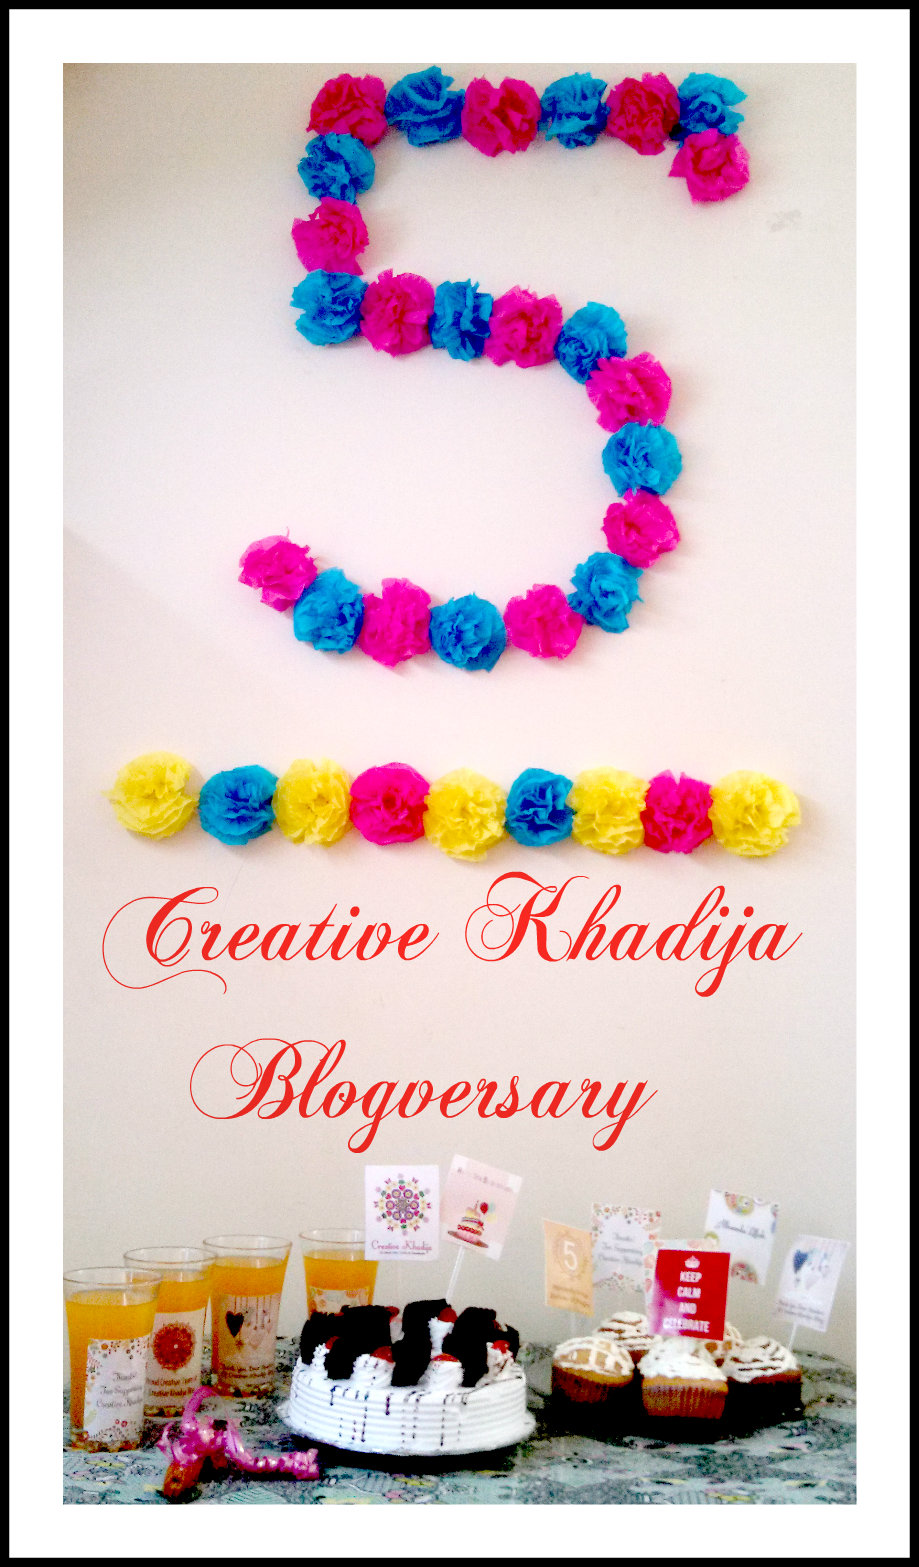 http://creativekhadija.com/wp-content/uploads/2015/04/creativekhadija-blog-birthday-blogversary-celebration.jpg